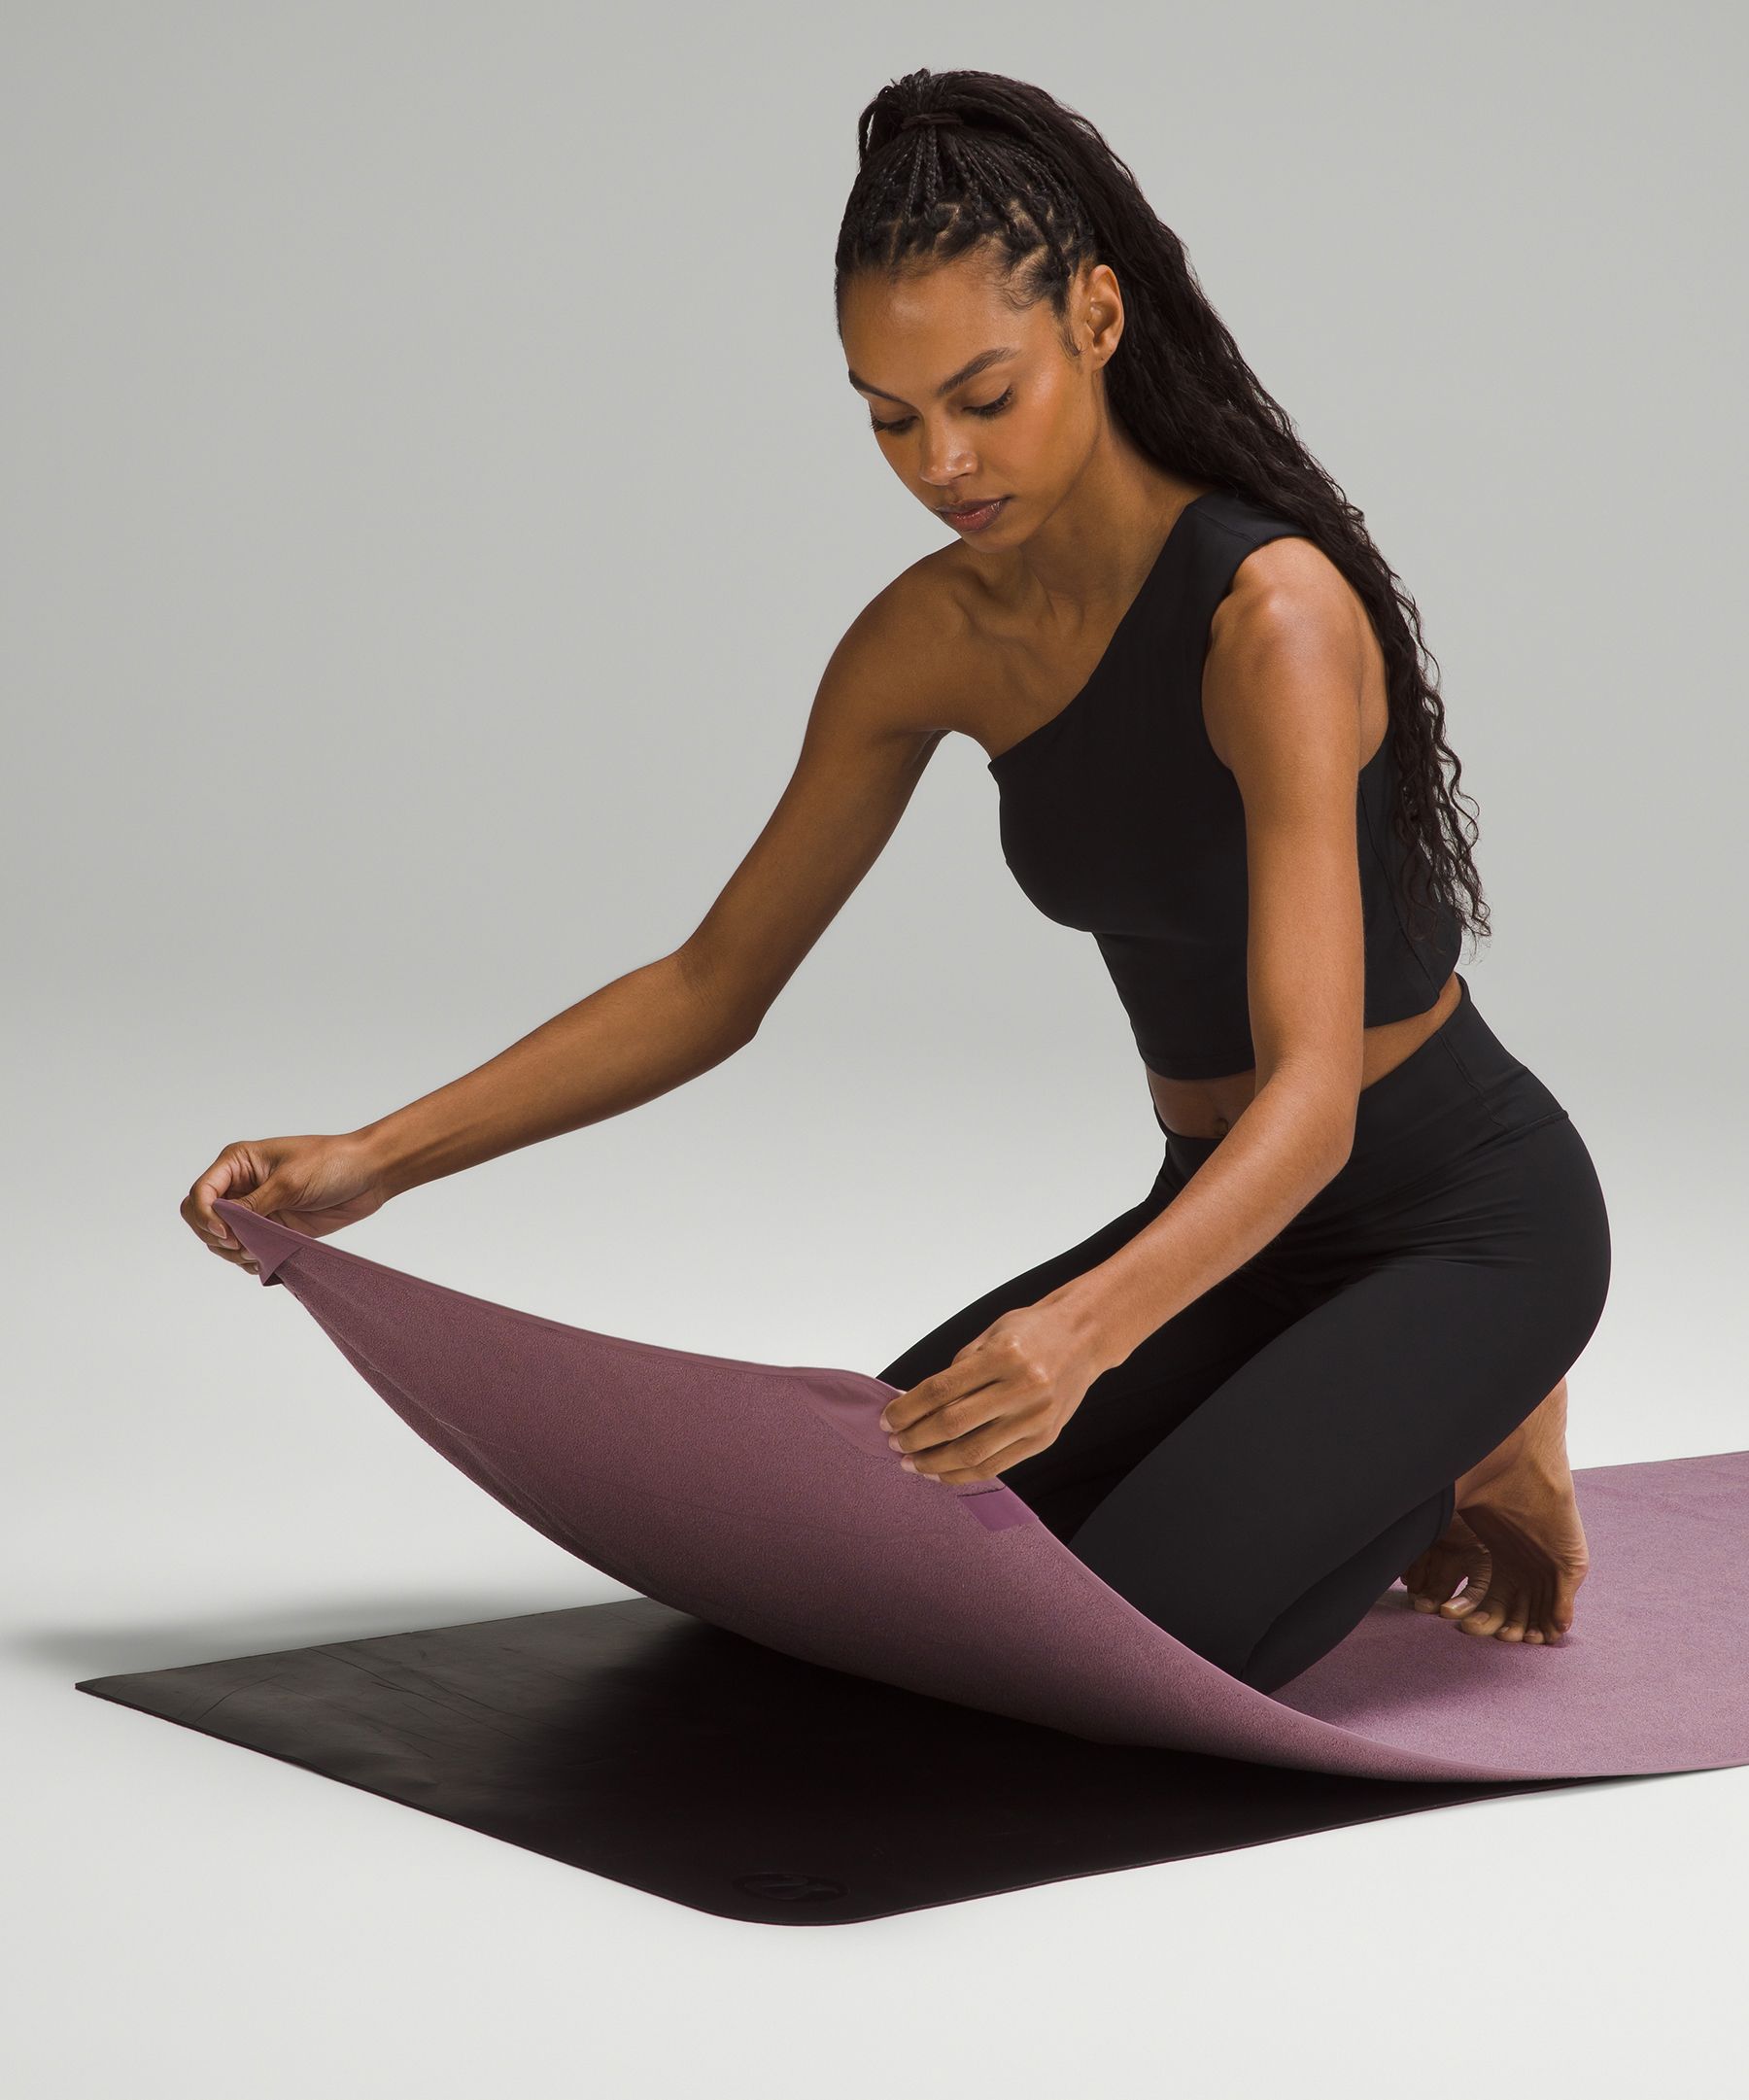 Yoga Mat Towel Non-Slip for Hot Yoga- Multifunctional No Slip Yoga Mat Towel,  Yoga Mat Cover - The Best Travel Yoga Mat Non Slip : : Sports &  Outdoors